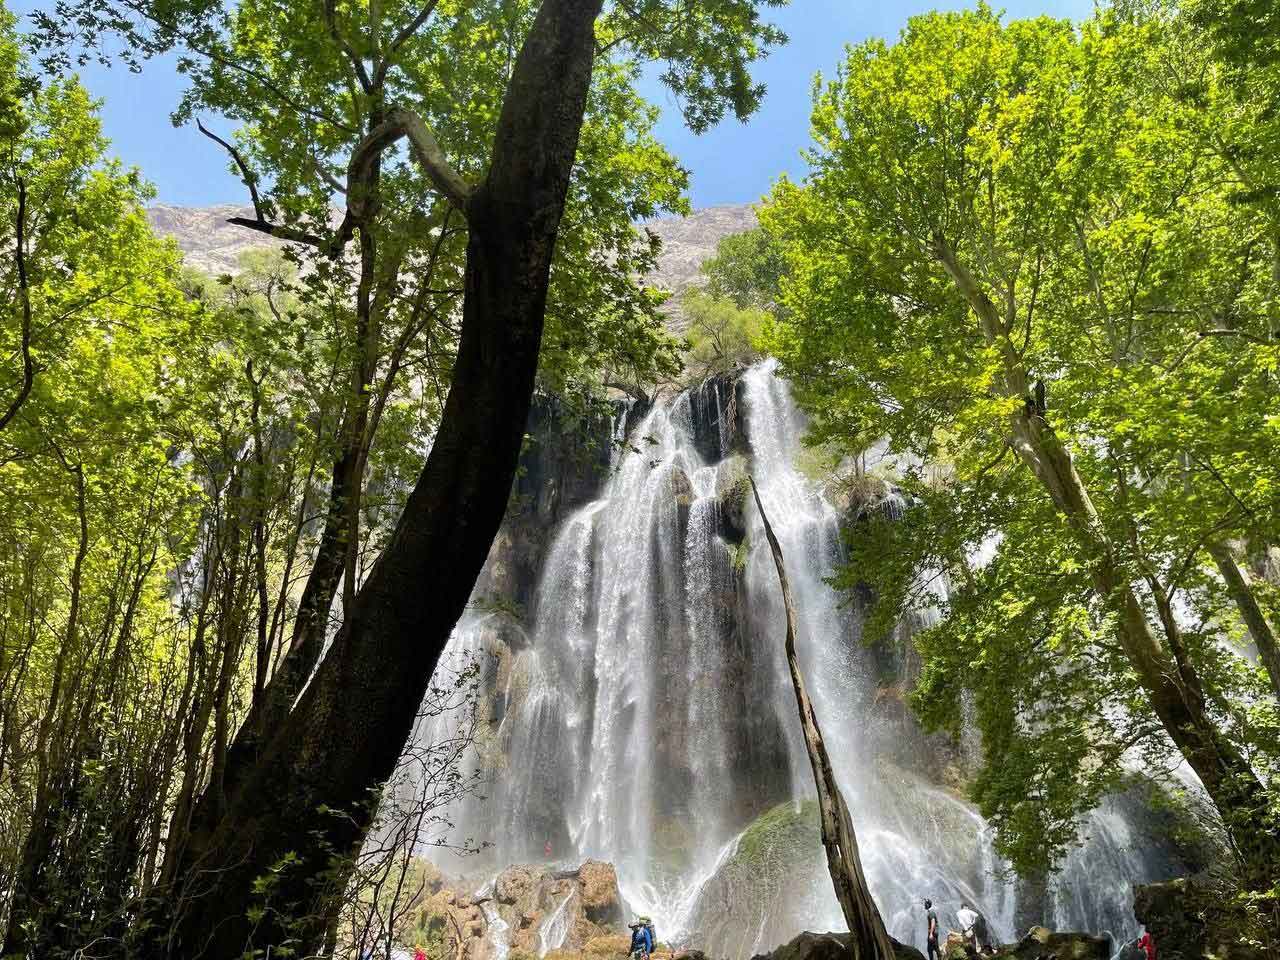 آبشار زردلیمه